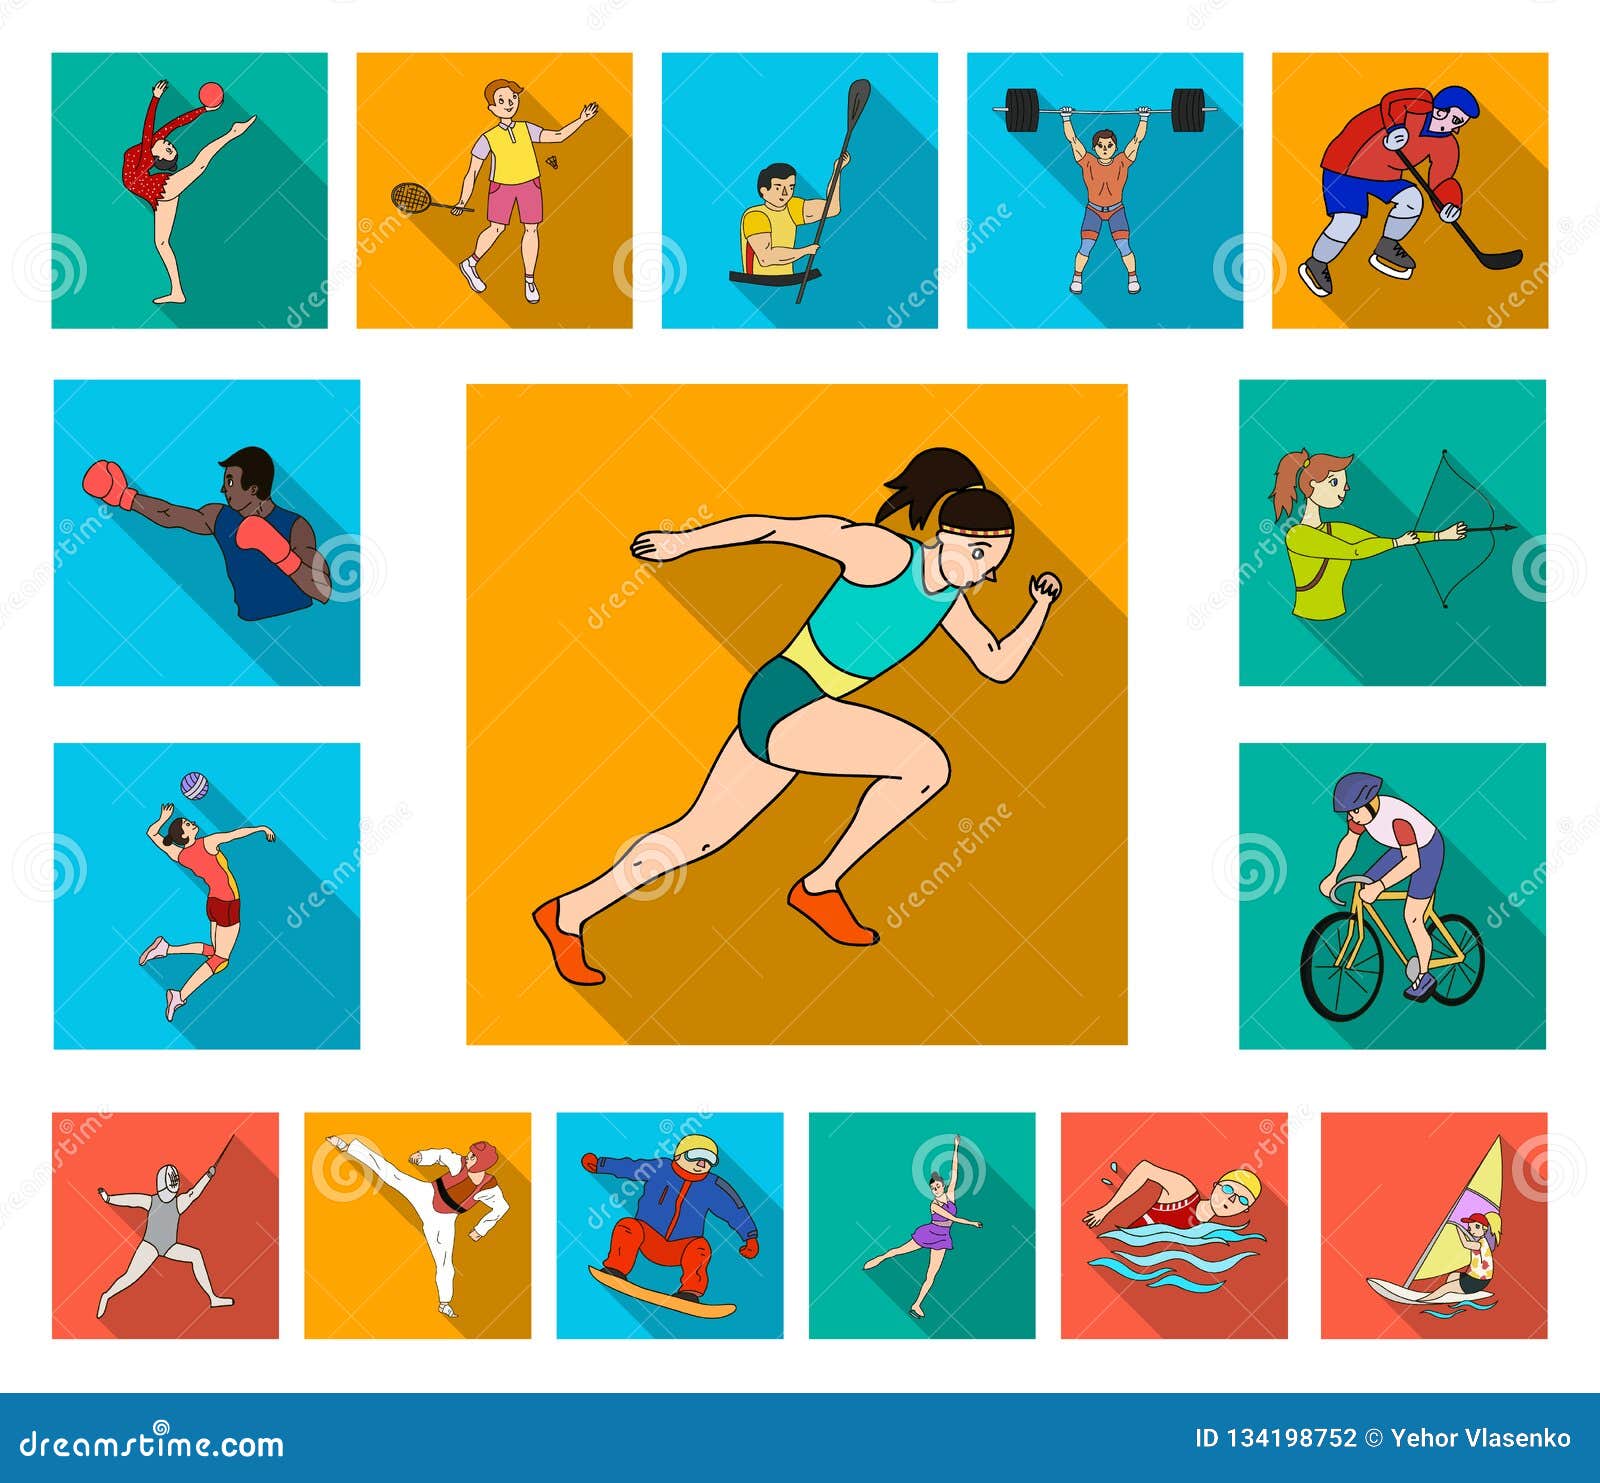 Different kinds of sport. Летние виды спорта. Иллюстрации с разными видами спорта. Виды спорта для детей. Летние виды спорта рисунки.